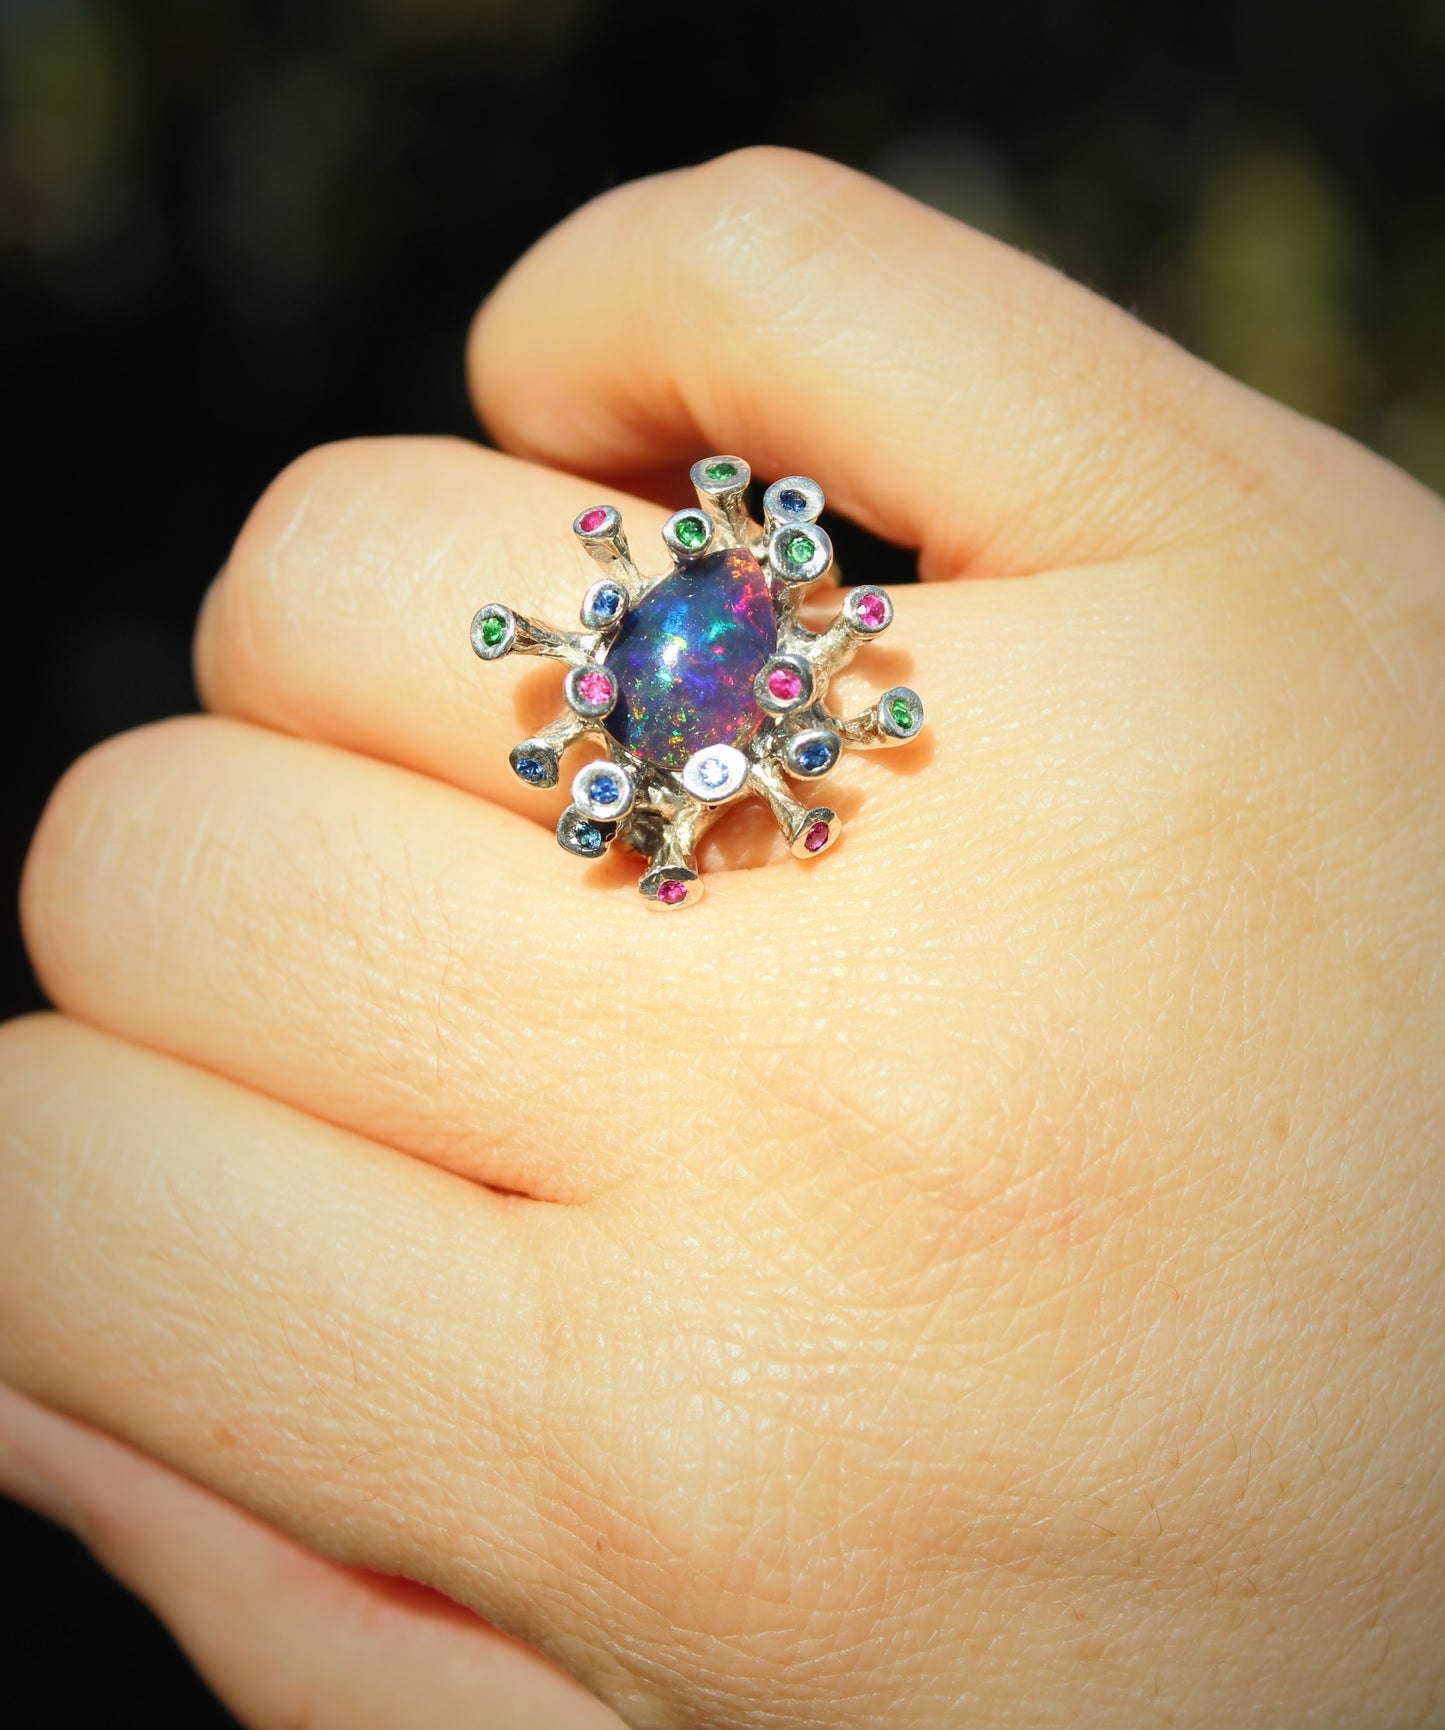 Black Opal & Gemstones Sterling Silver Ring - Handmade Jewelry #217